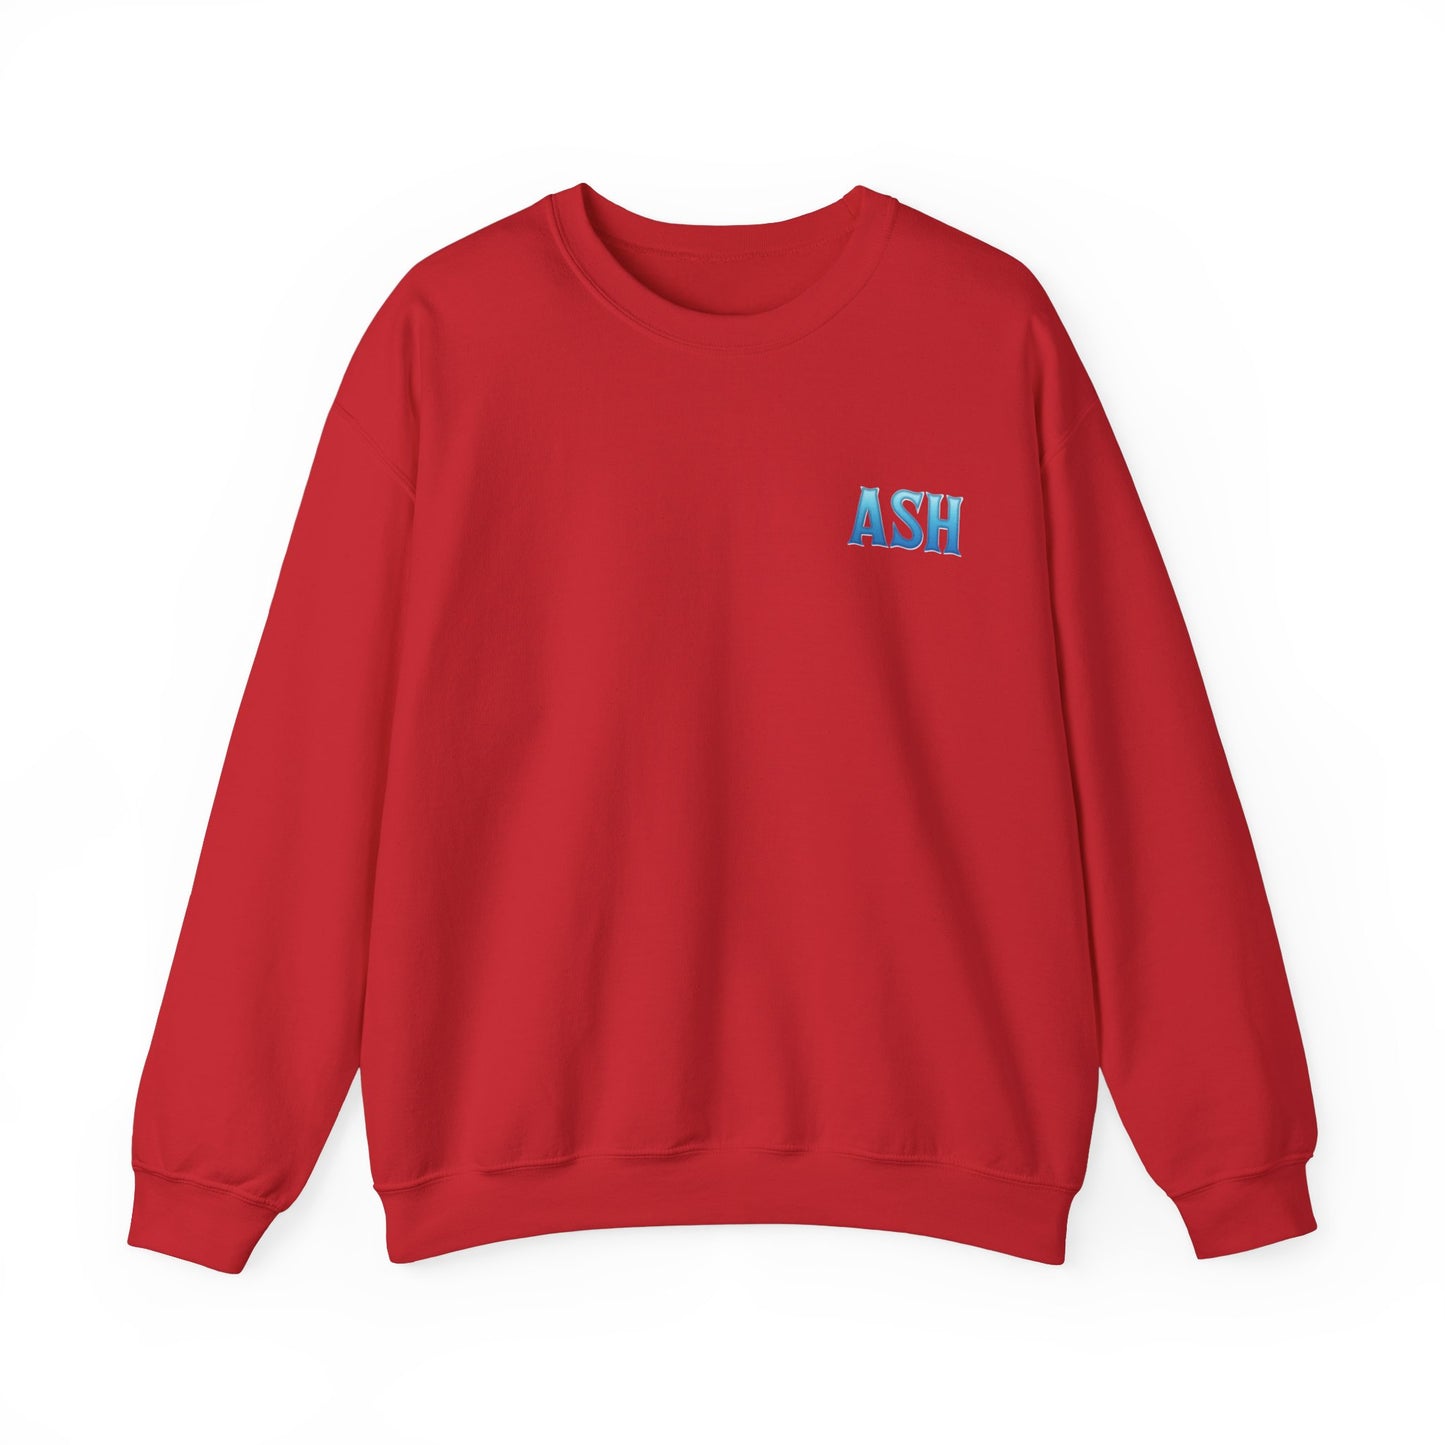 Ash Crewneck Sweatshirt